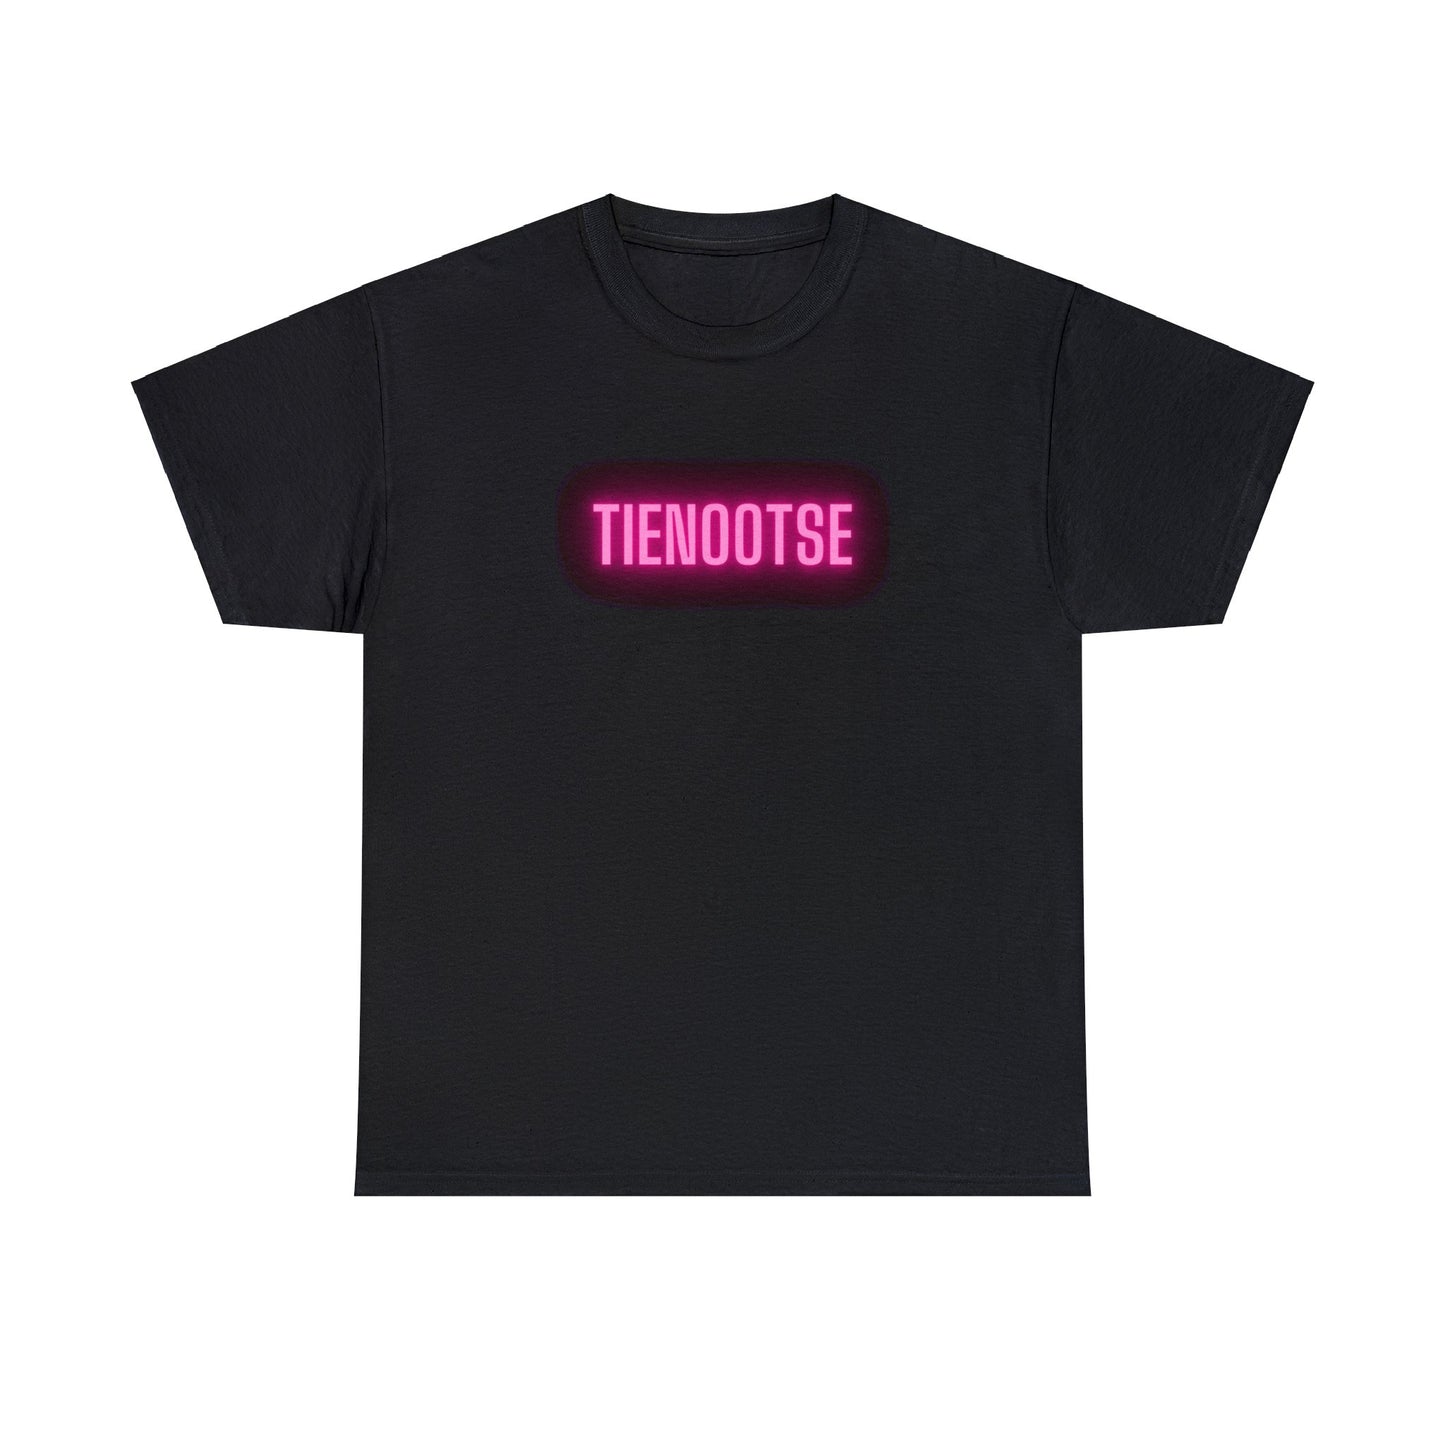 Int Gentsch - Tshirt - Tienootse